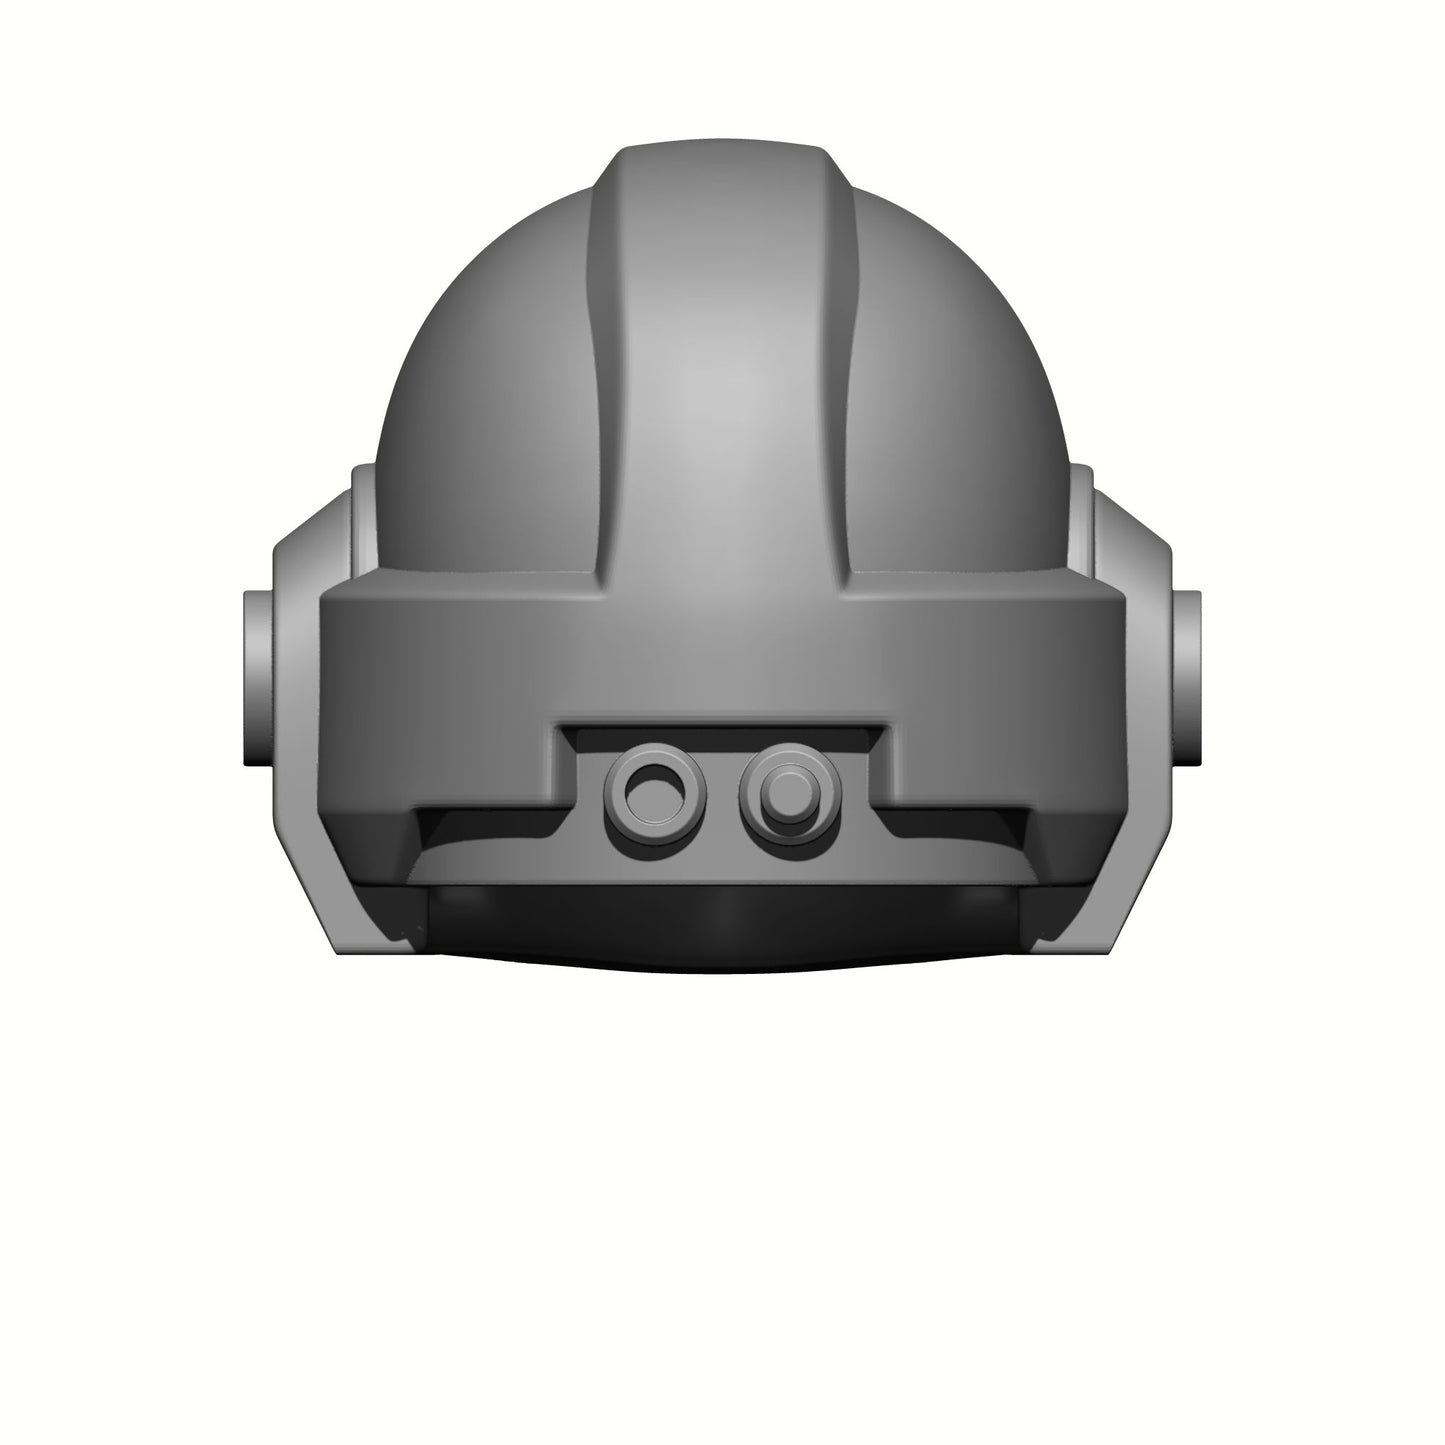 Knight Helmet with Skull and Single Hose: Demon Slayer Head Swaps Warhammer 40K JoyToy Compatible Space Marine 1:18 Action Figure 4" Custom Parts